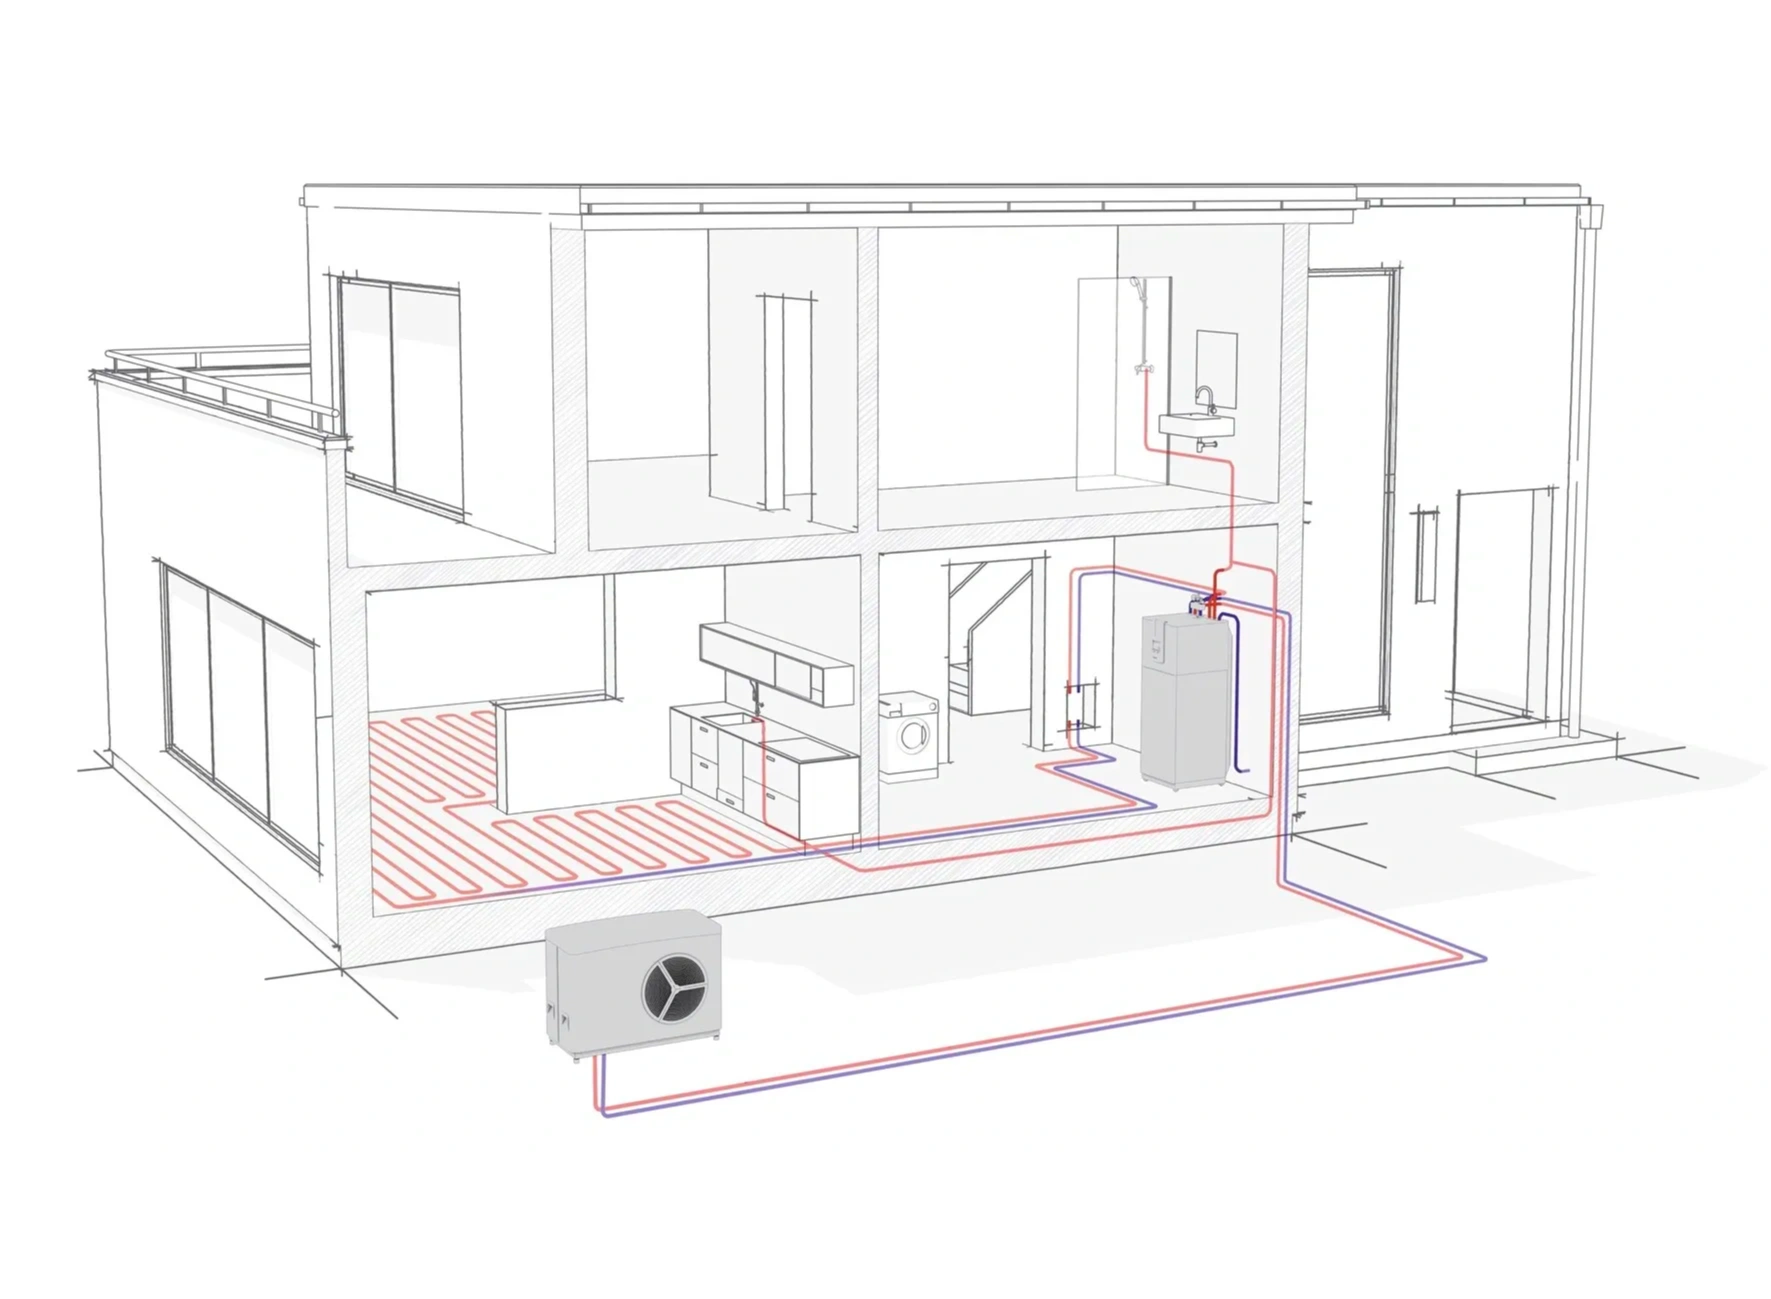 Diagram of Air Source Heat Pump. Stiebel Eltron. Samsung. Vaillant. Supplied and installed by Niche 